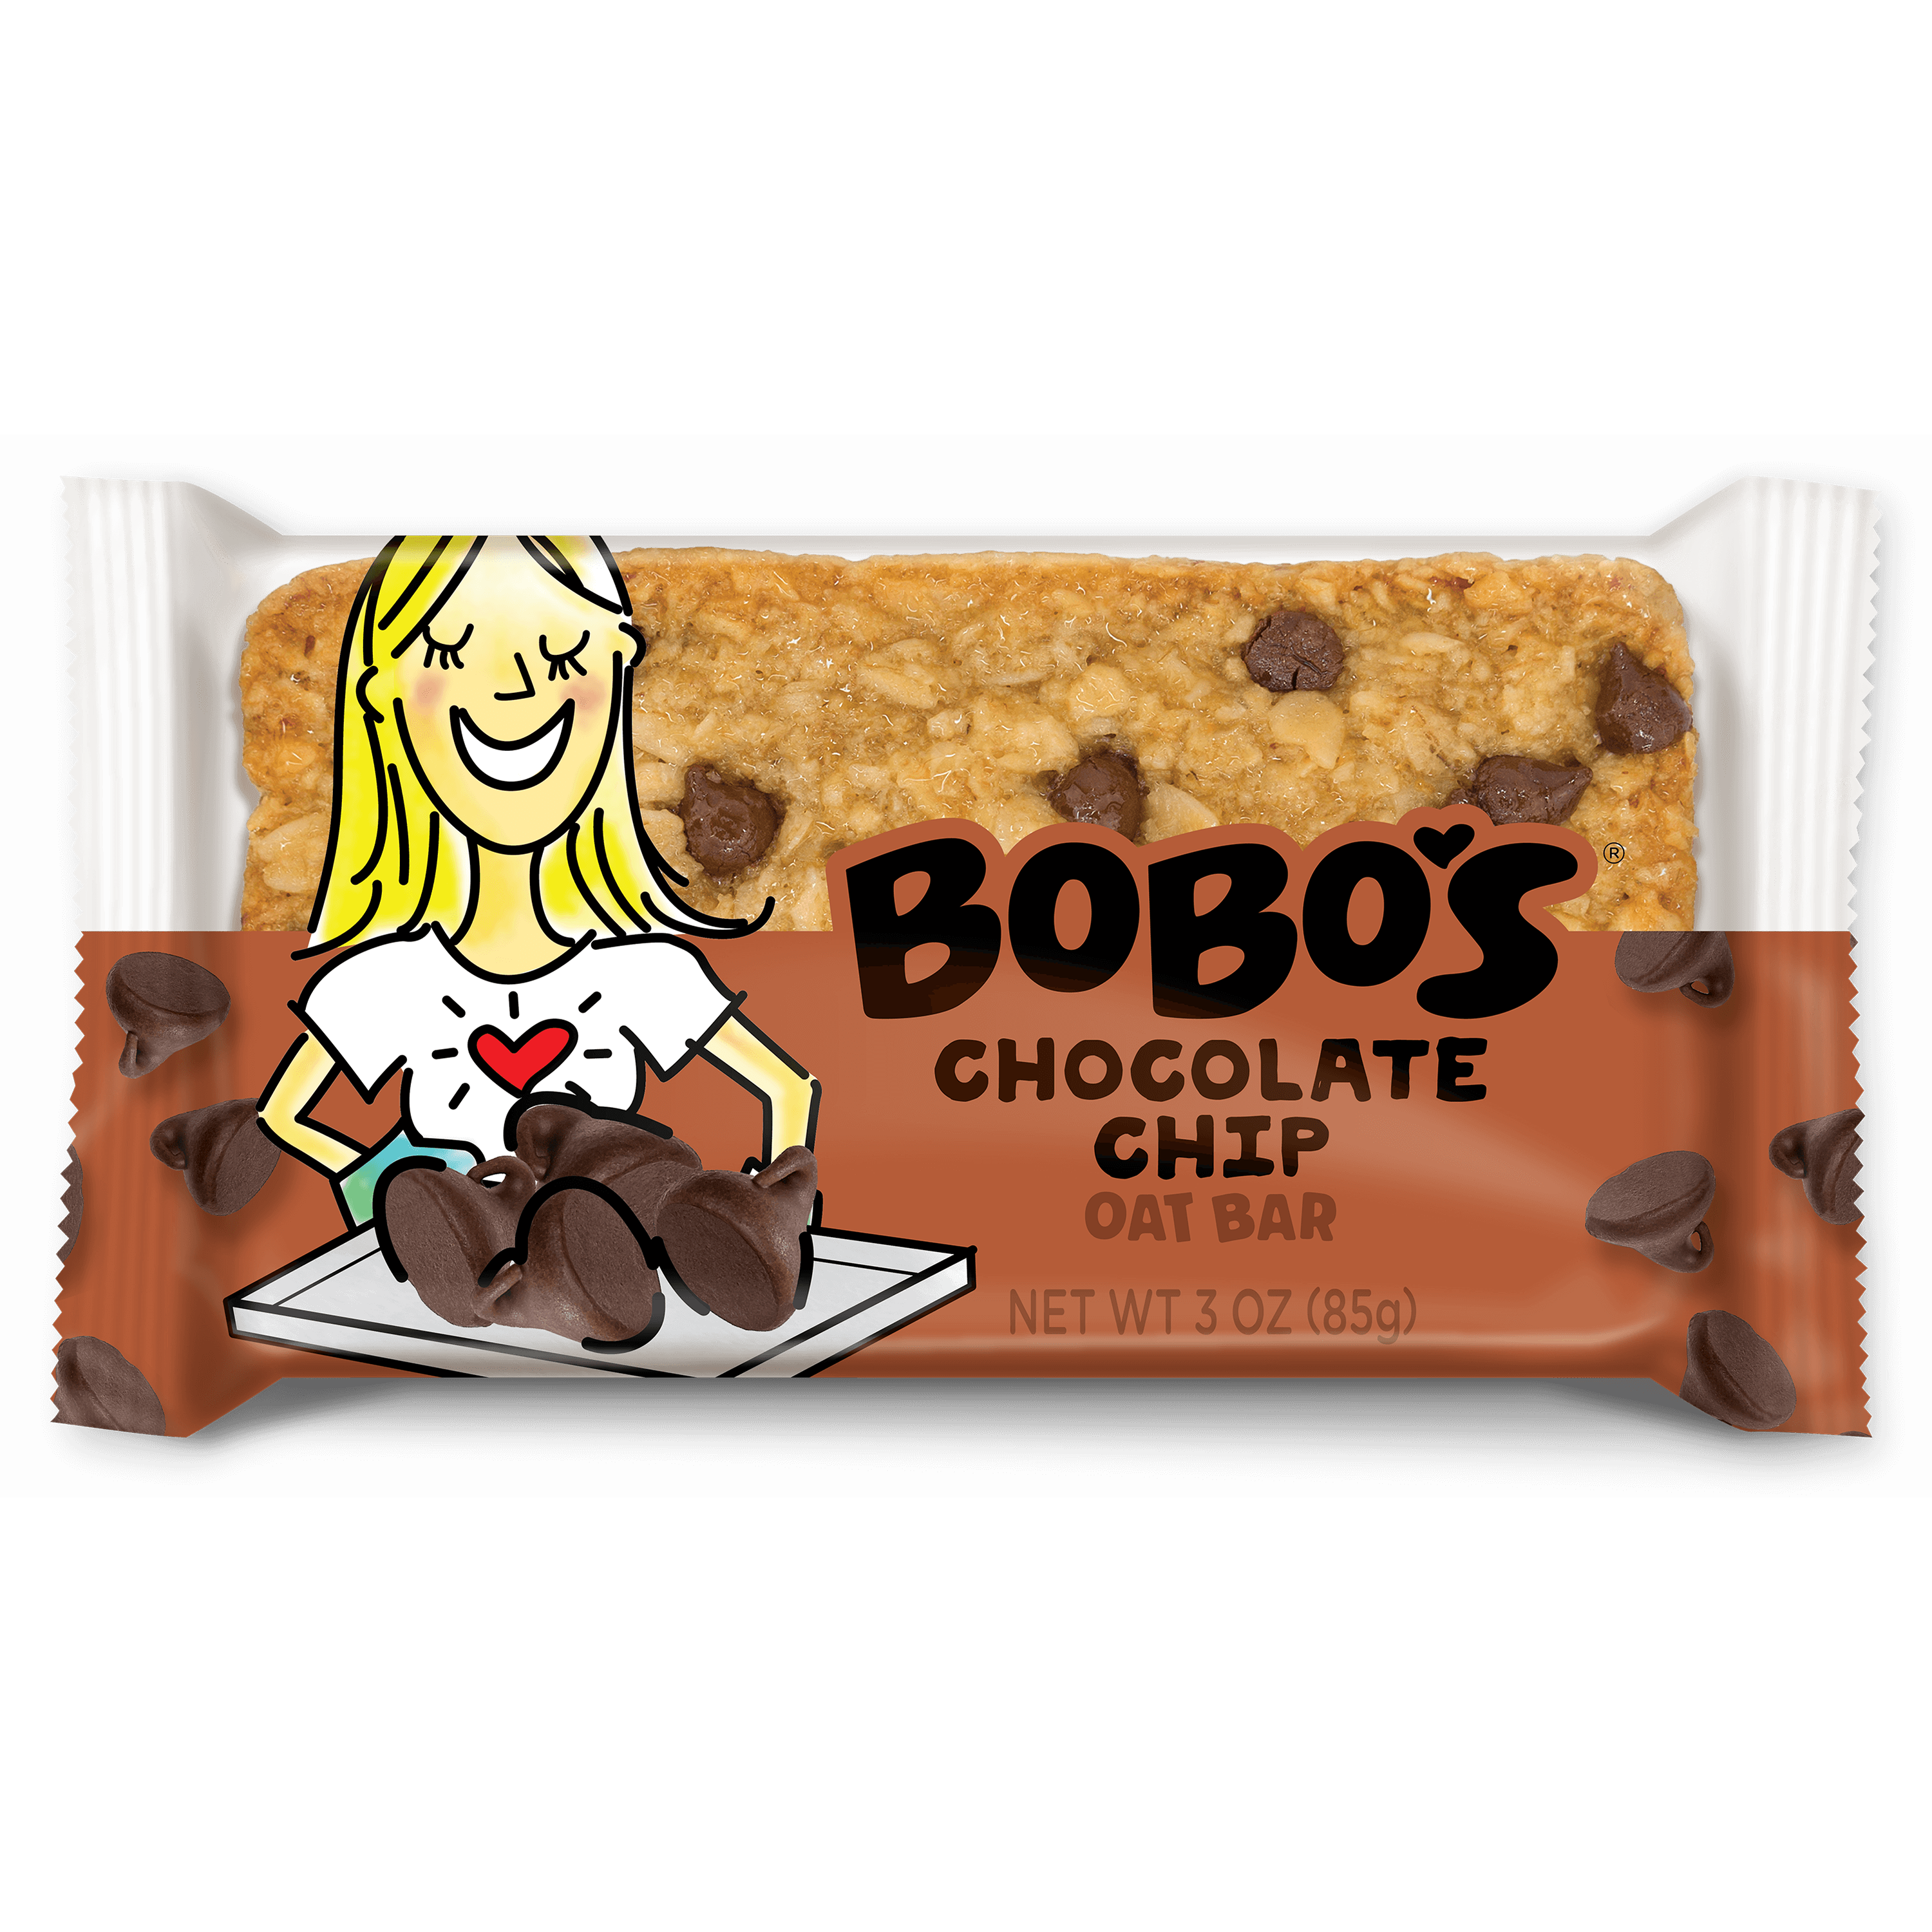 Bobo's Chocolate Chip Oat Bar, 3 OZ